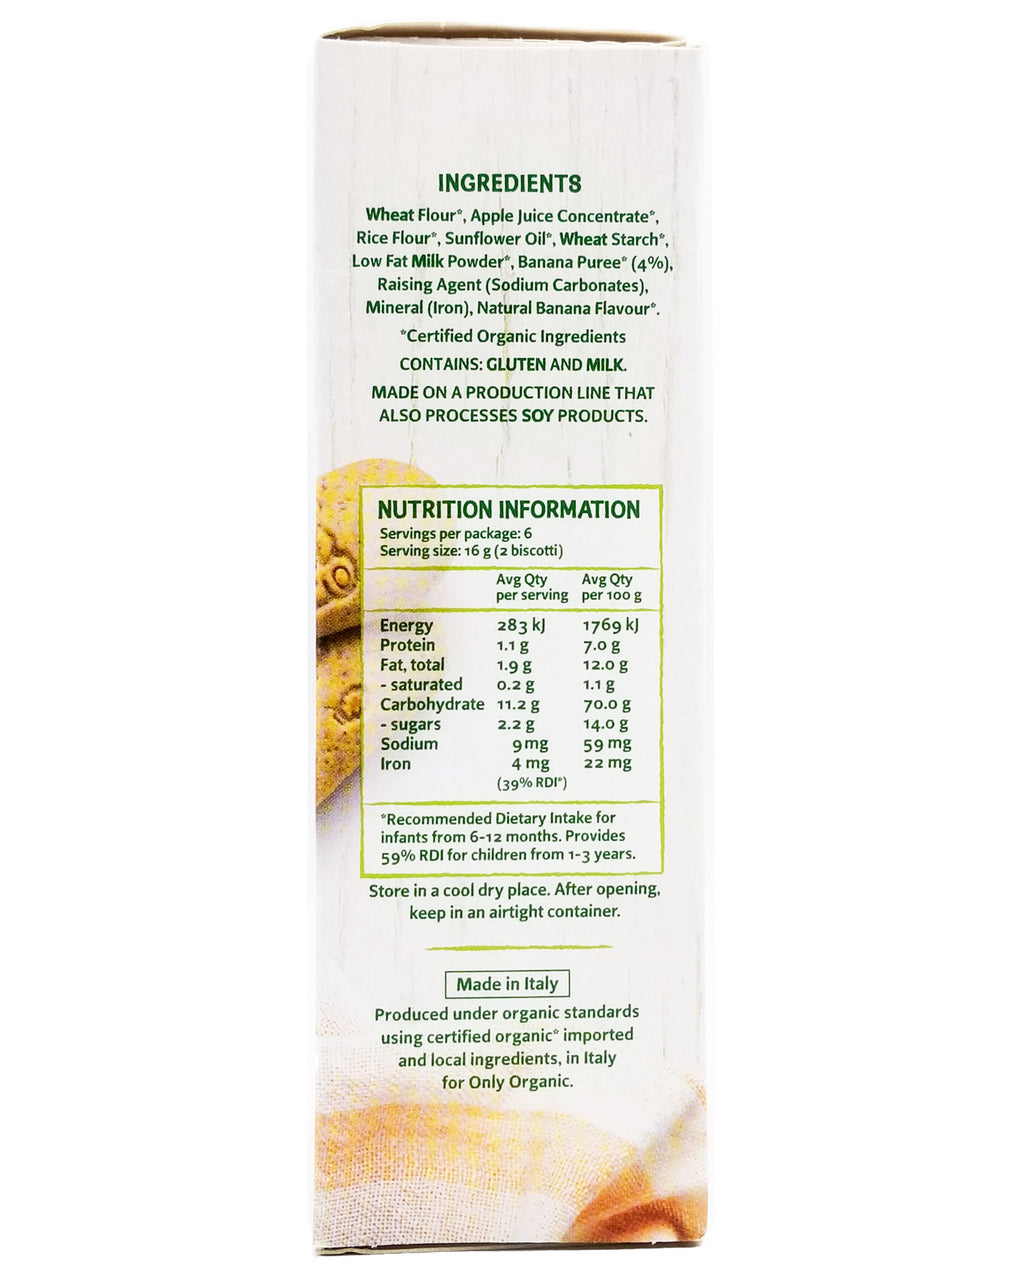 Monoprix Organic Baby Food 5+ months - Apple Banana (4x100g)